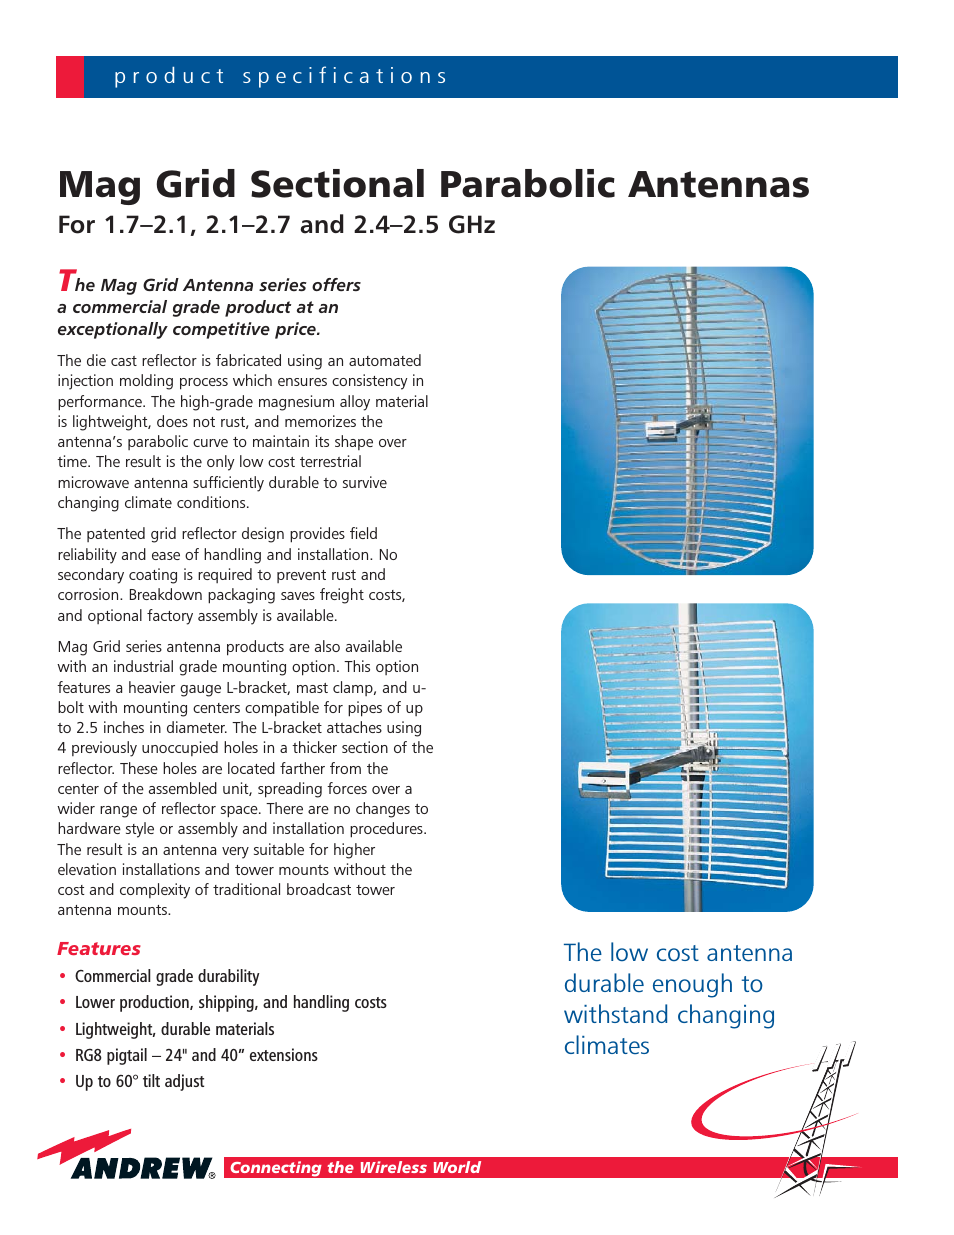 Grid Sectional Parabolic Antennas